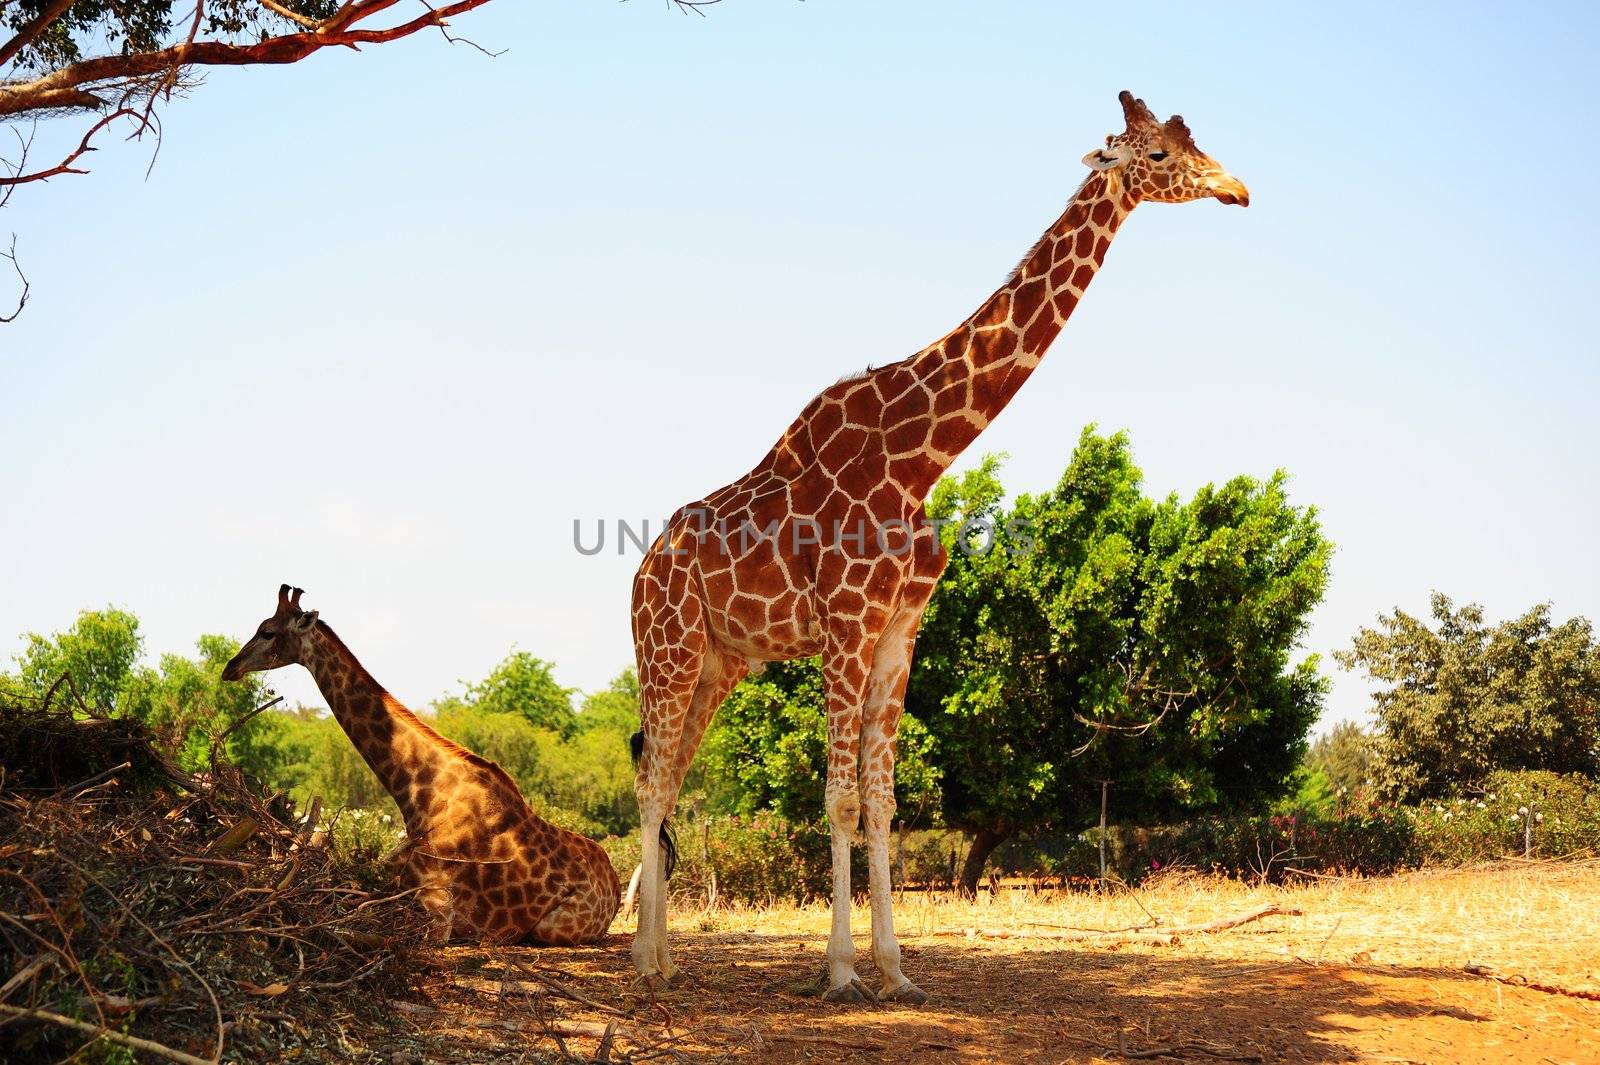 Couple of Giraffes by gkuna